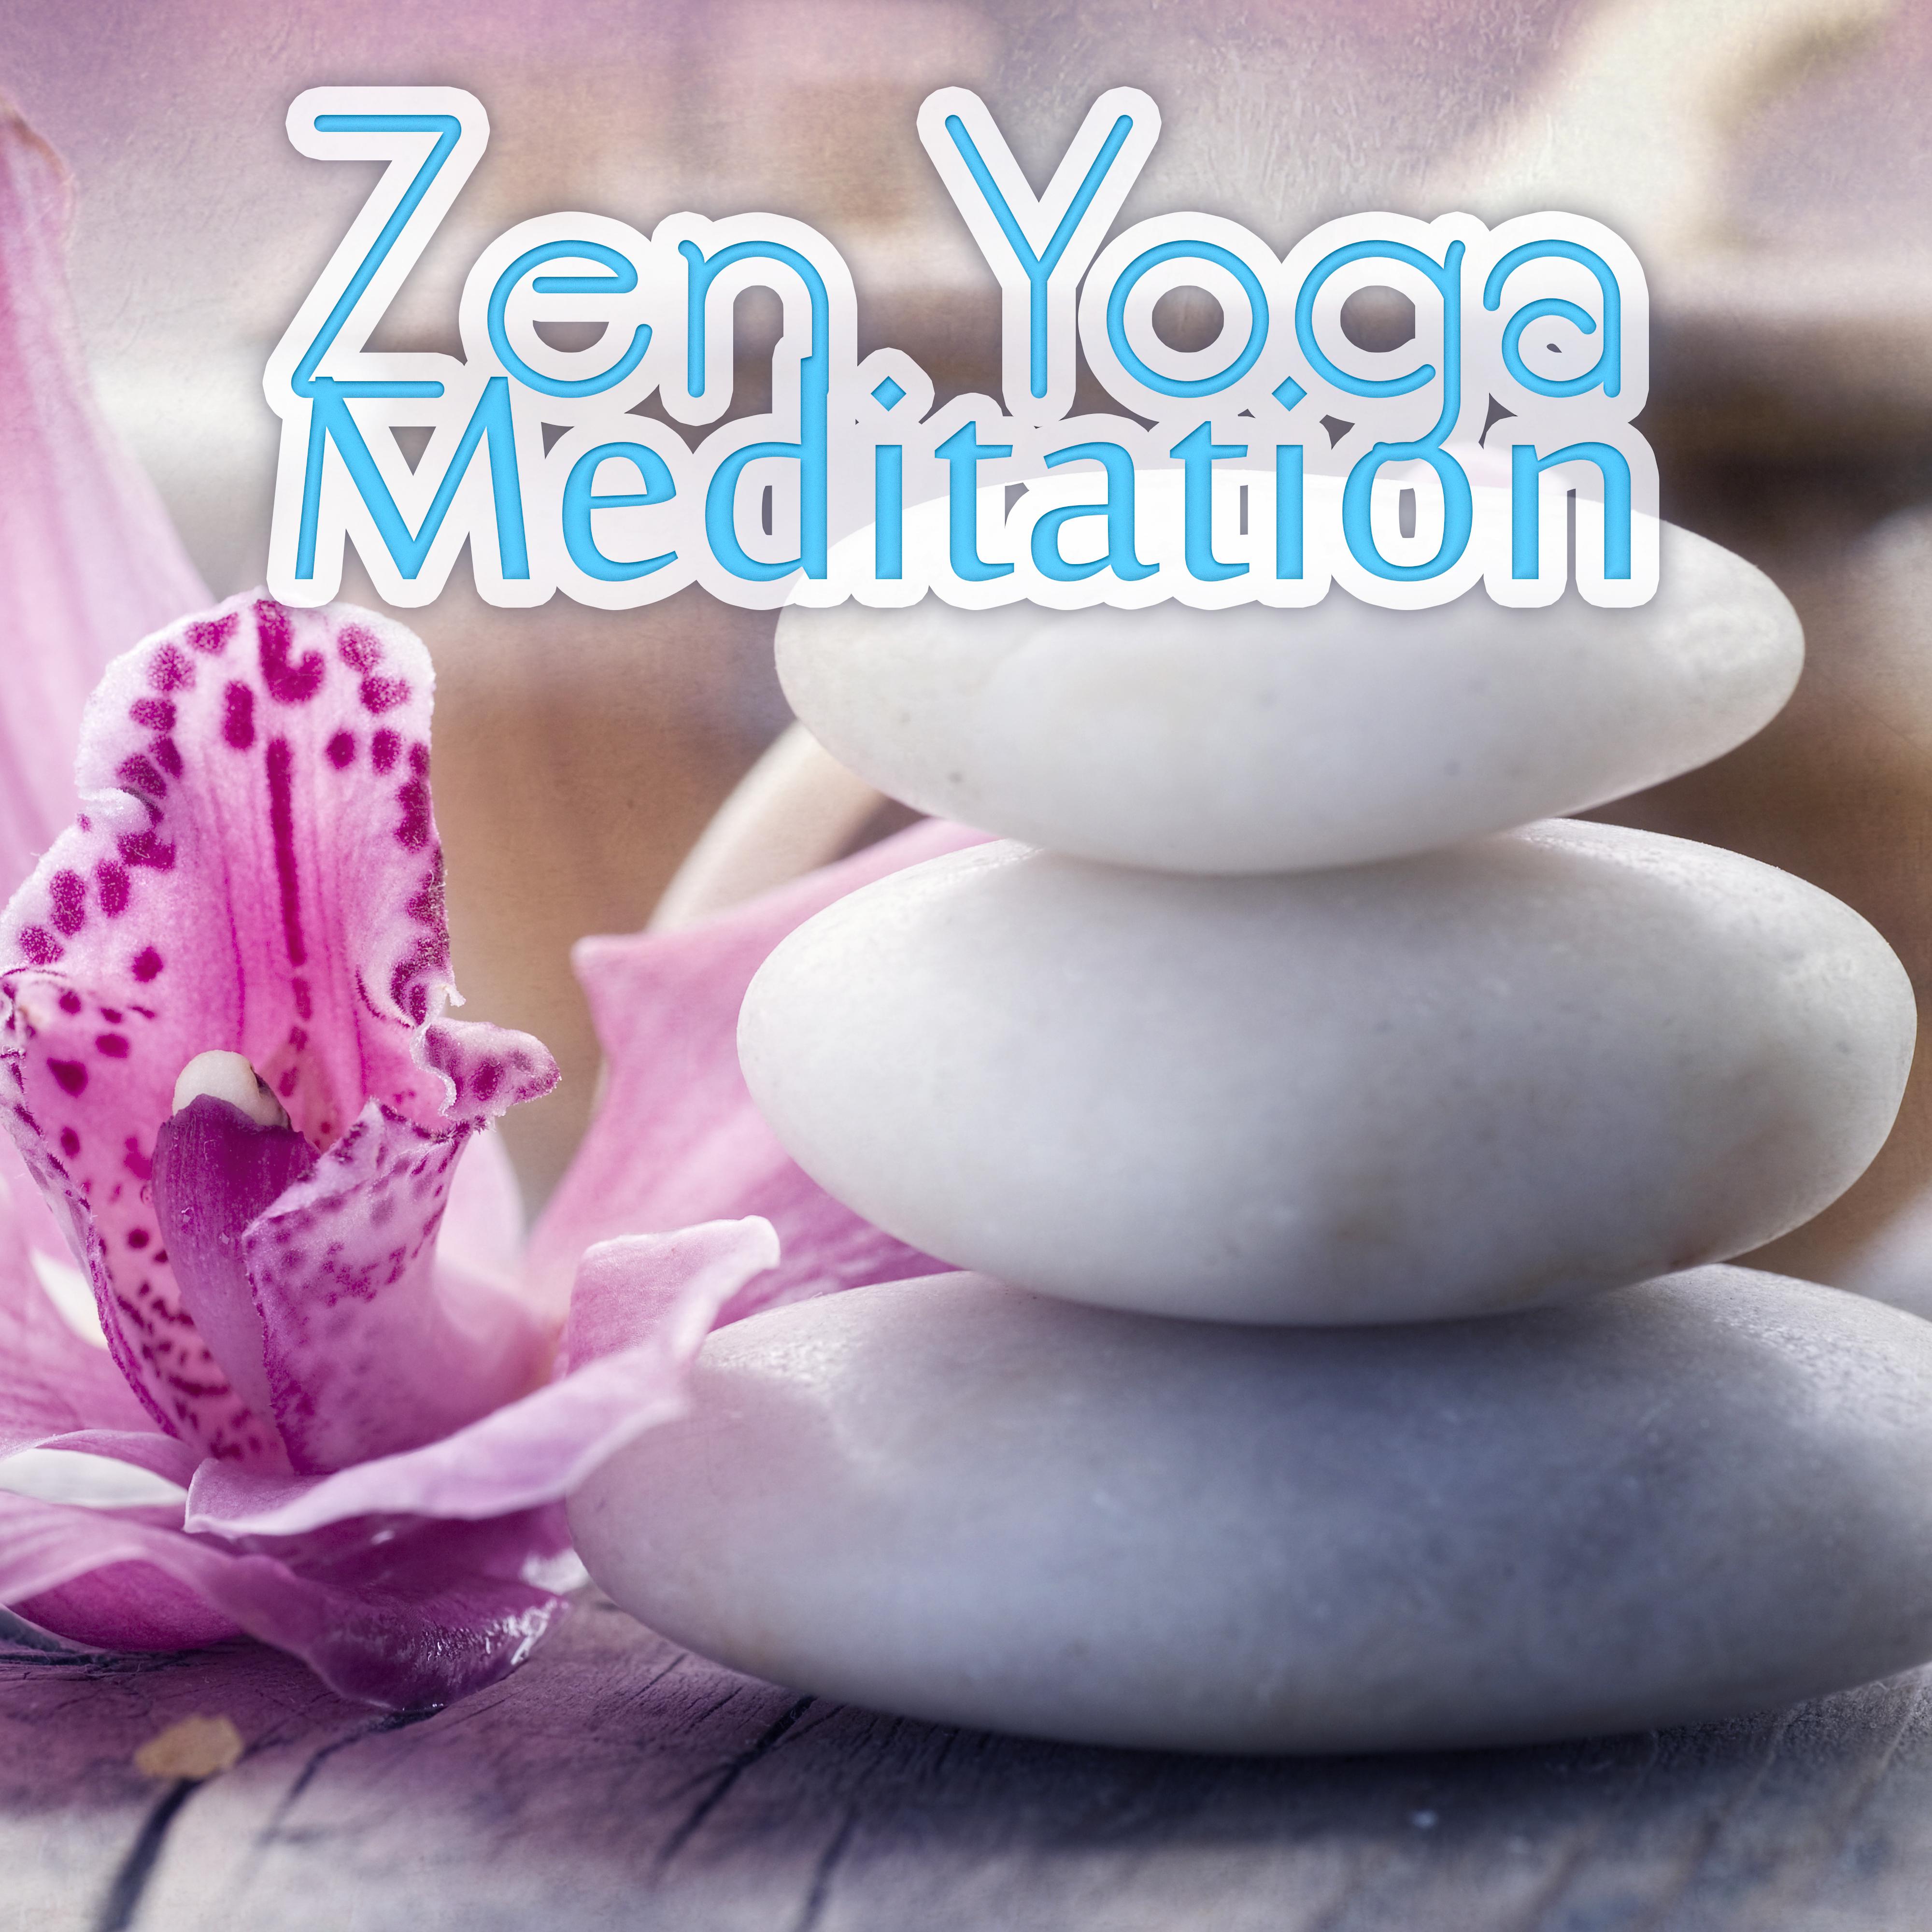 Zen Yoga Meditation  Calming Music, Yoga, Contemplation, Sun Salutation, Relaxing Music, Easy Listening, Blissful, Mindful Meditation